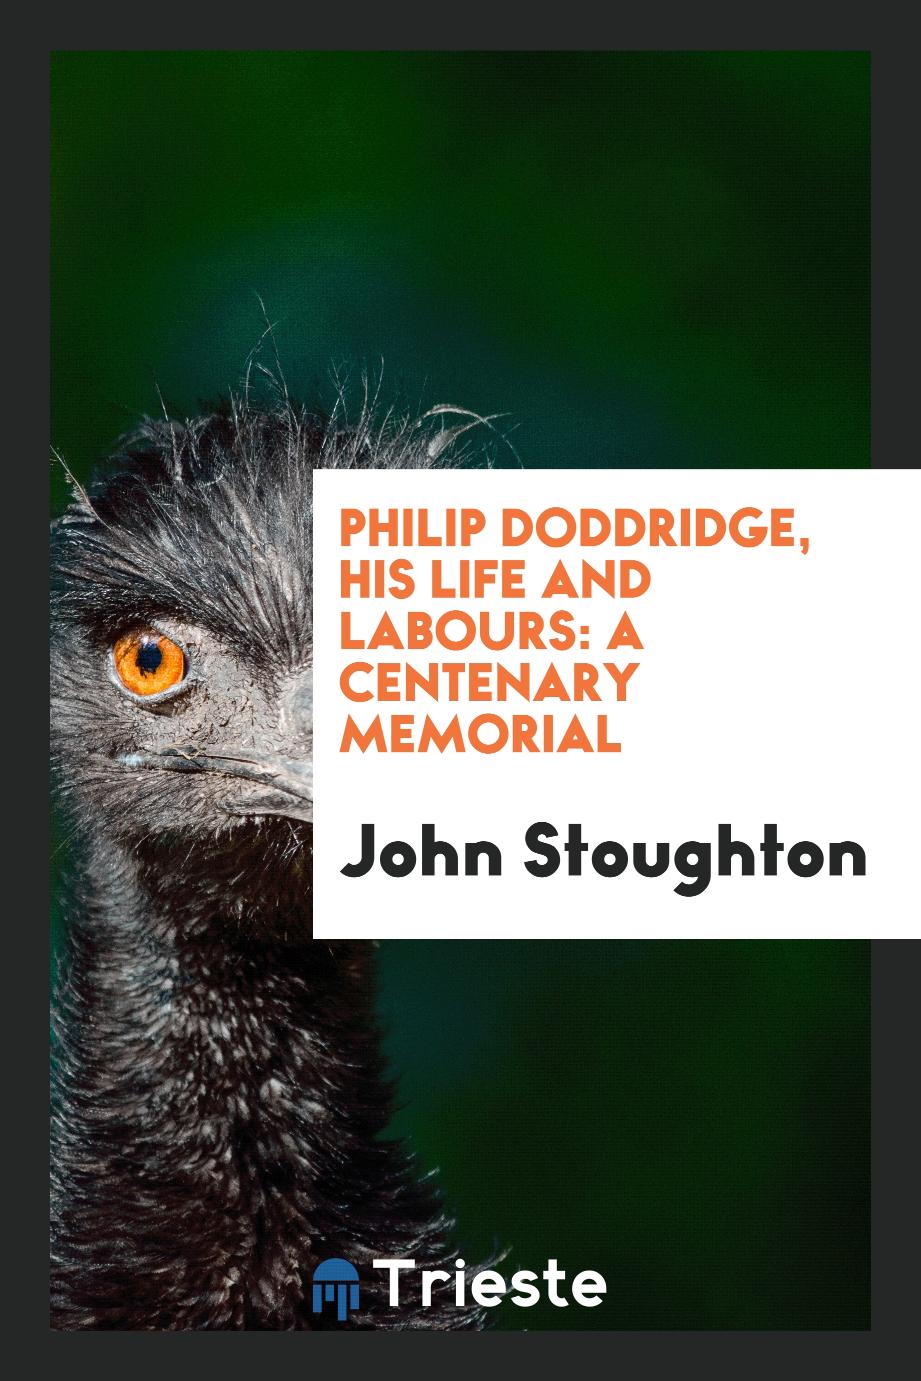 Philip Doddridge, his life and labours: a centenary memorial